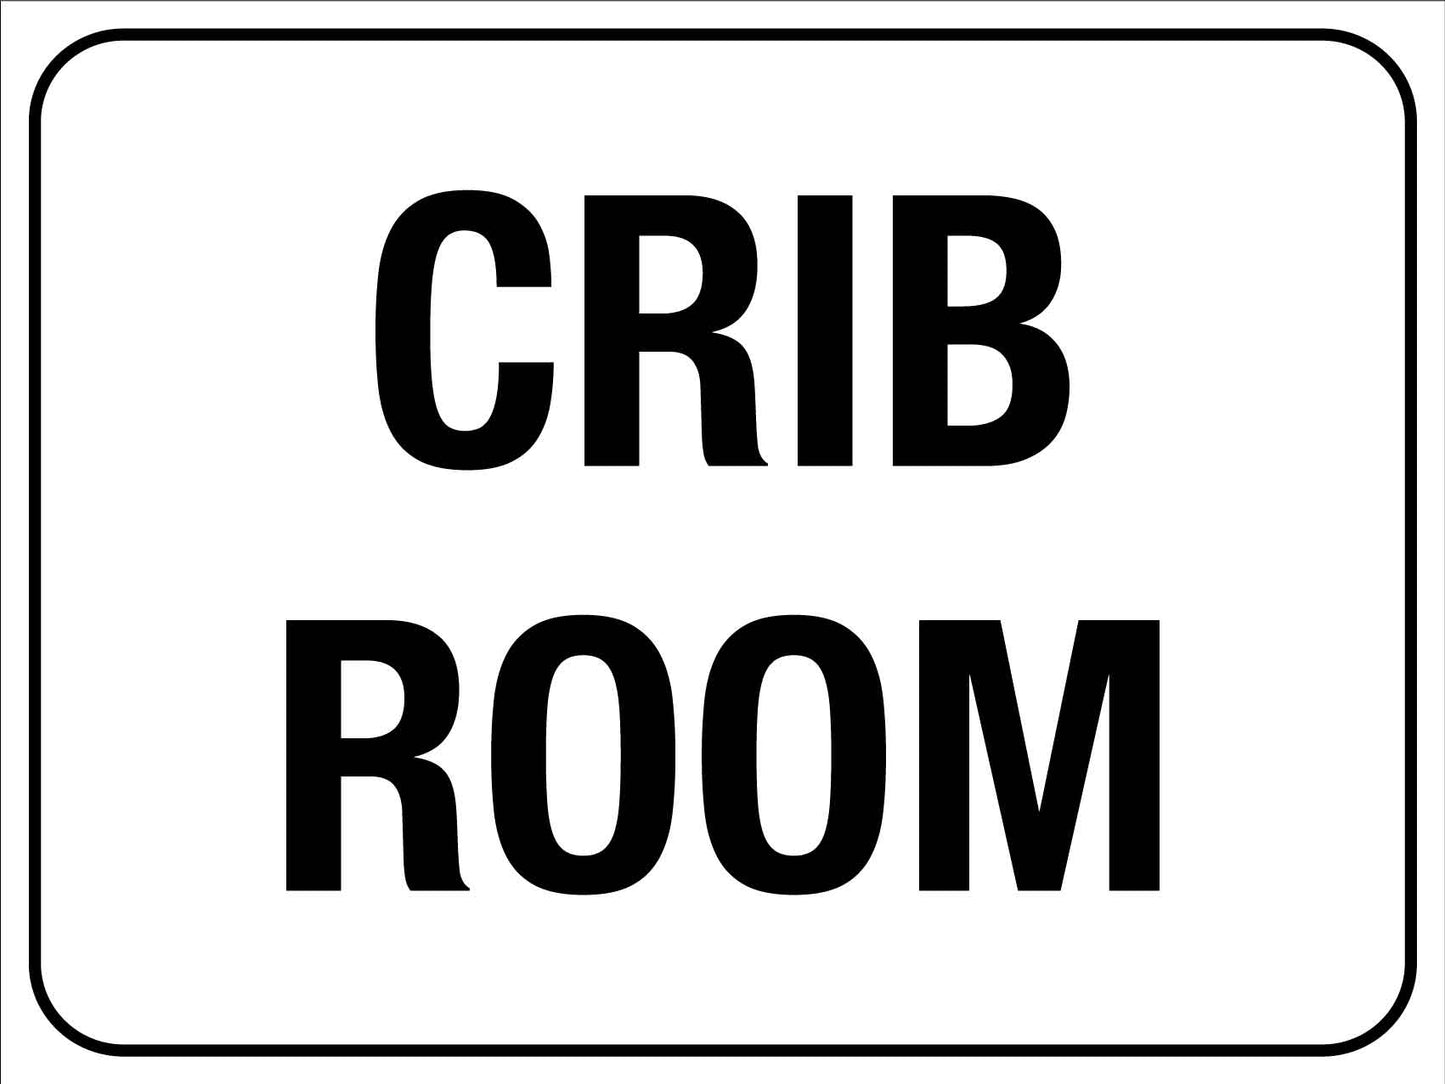 Crib Room Sign